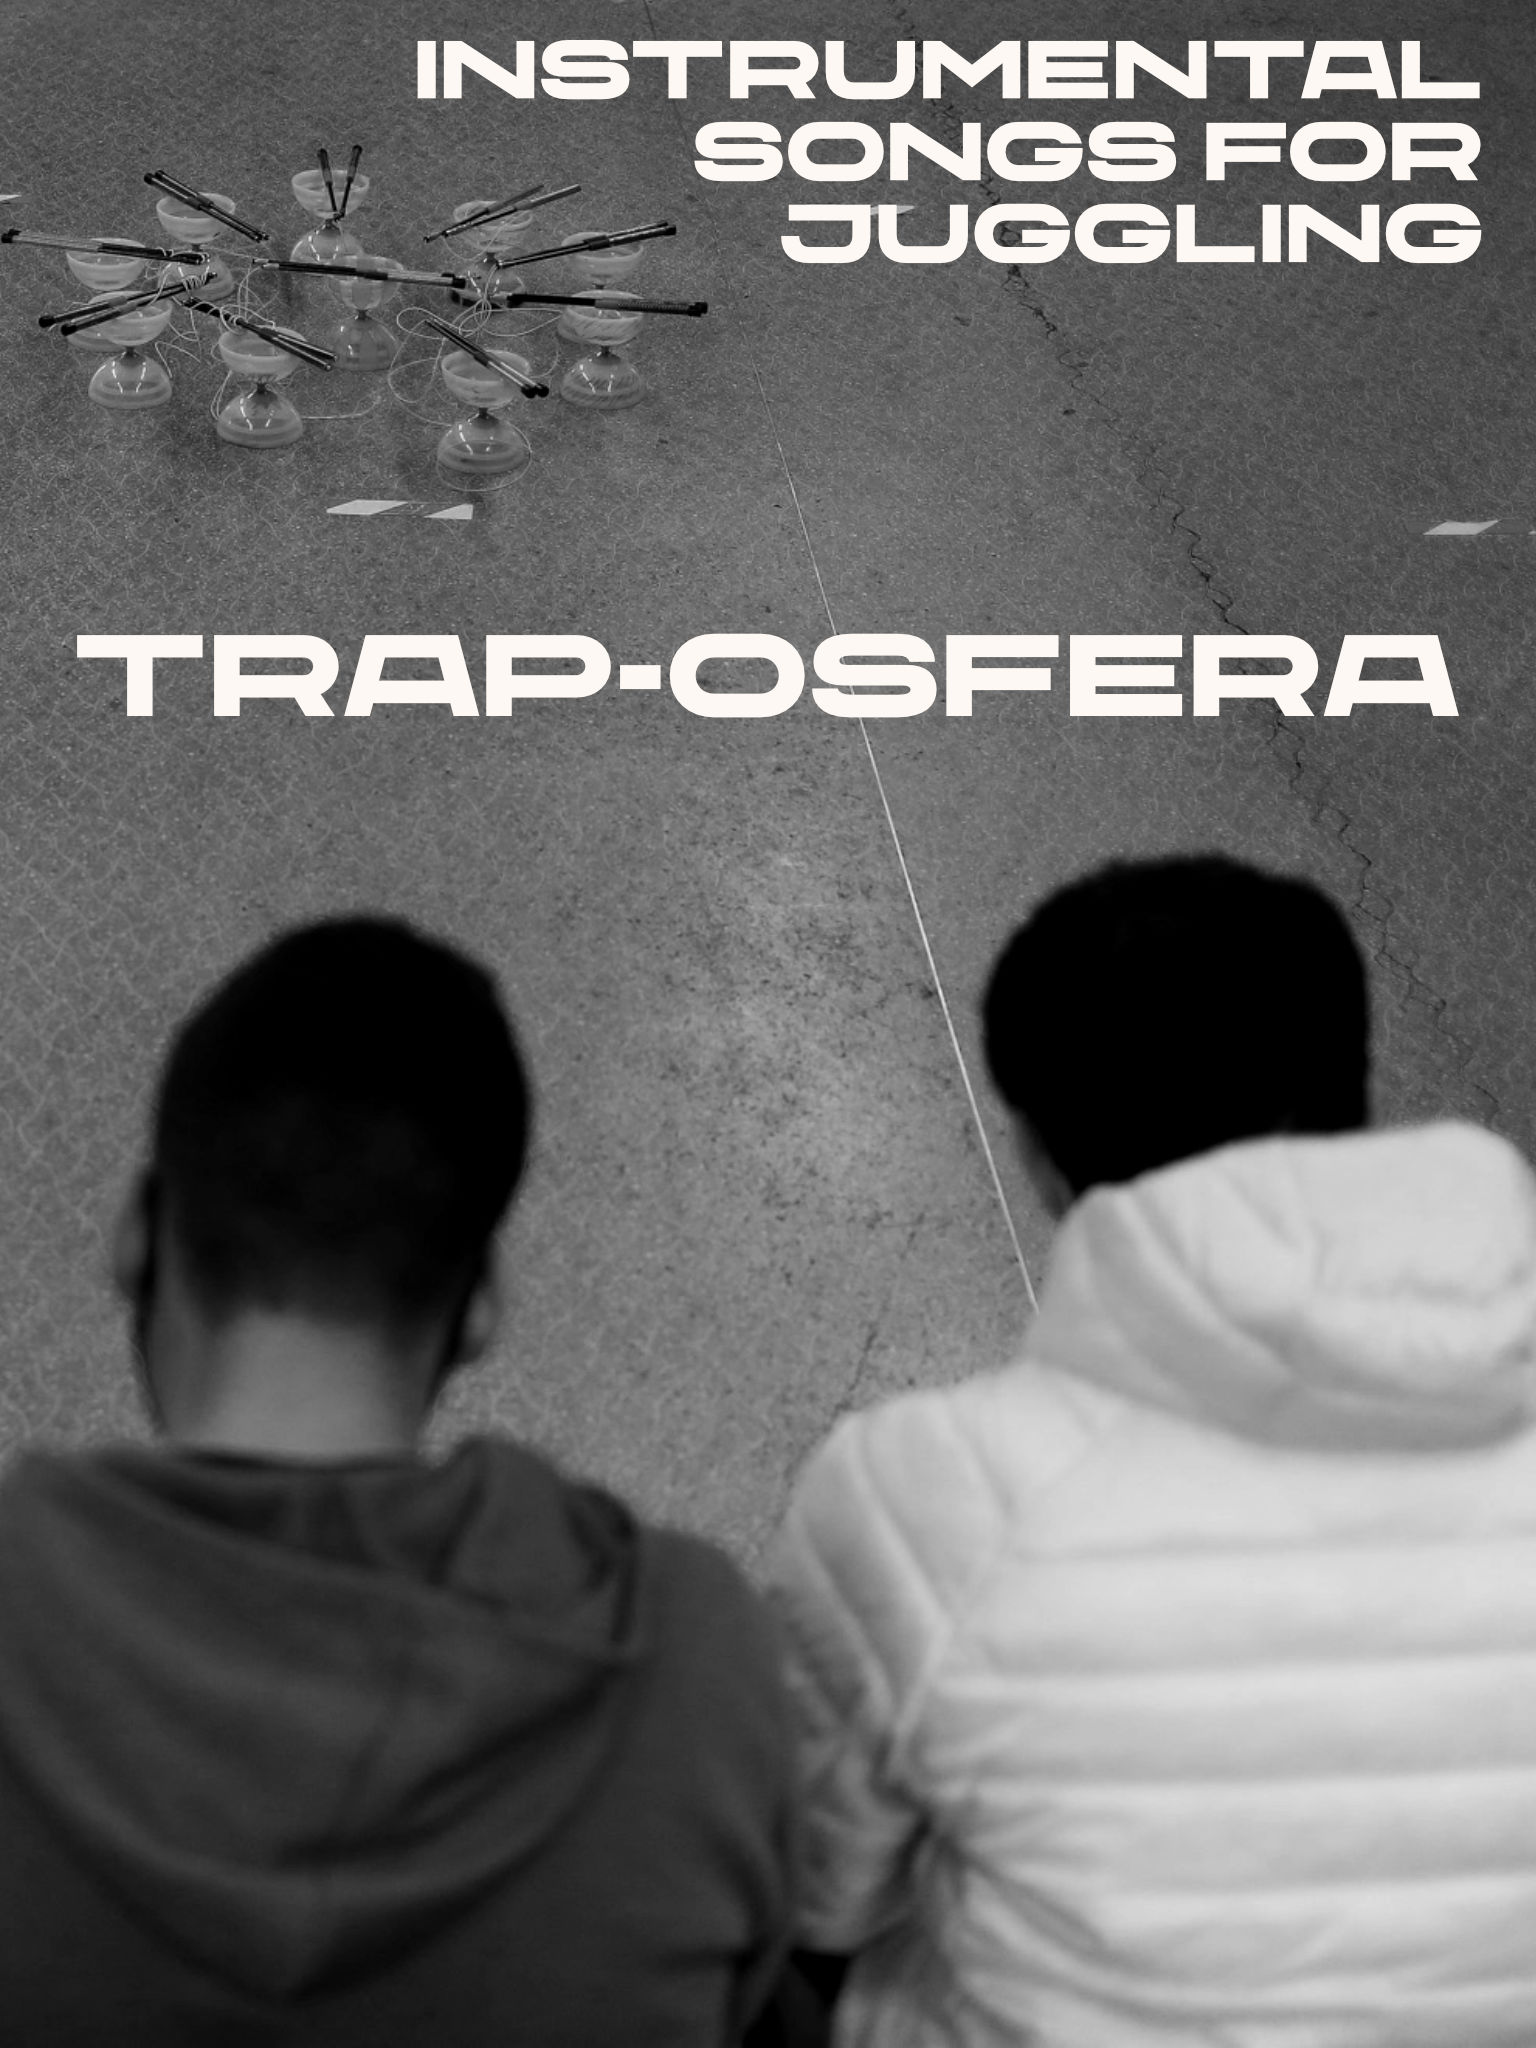 Traposfera, Instrumental Trap Songs for juggling - Music for Juggling - BLOG - troposfera.xyz